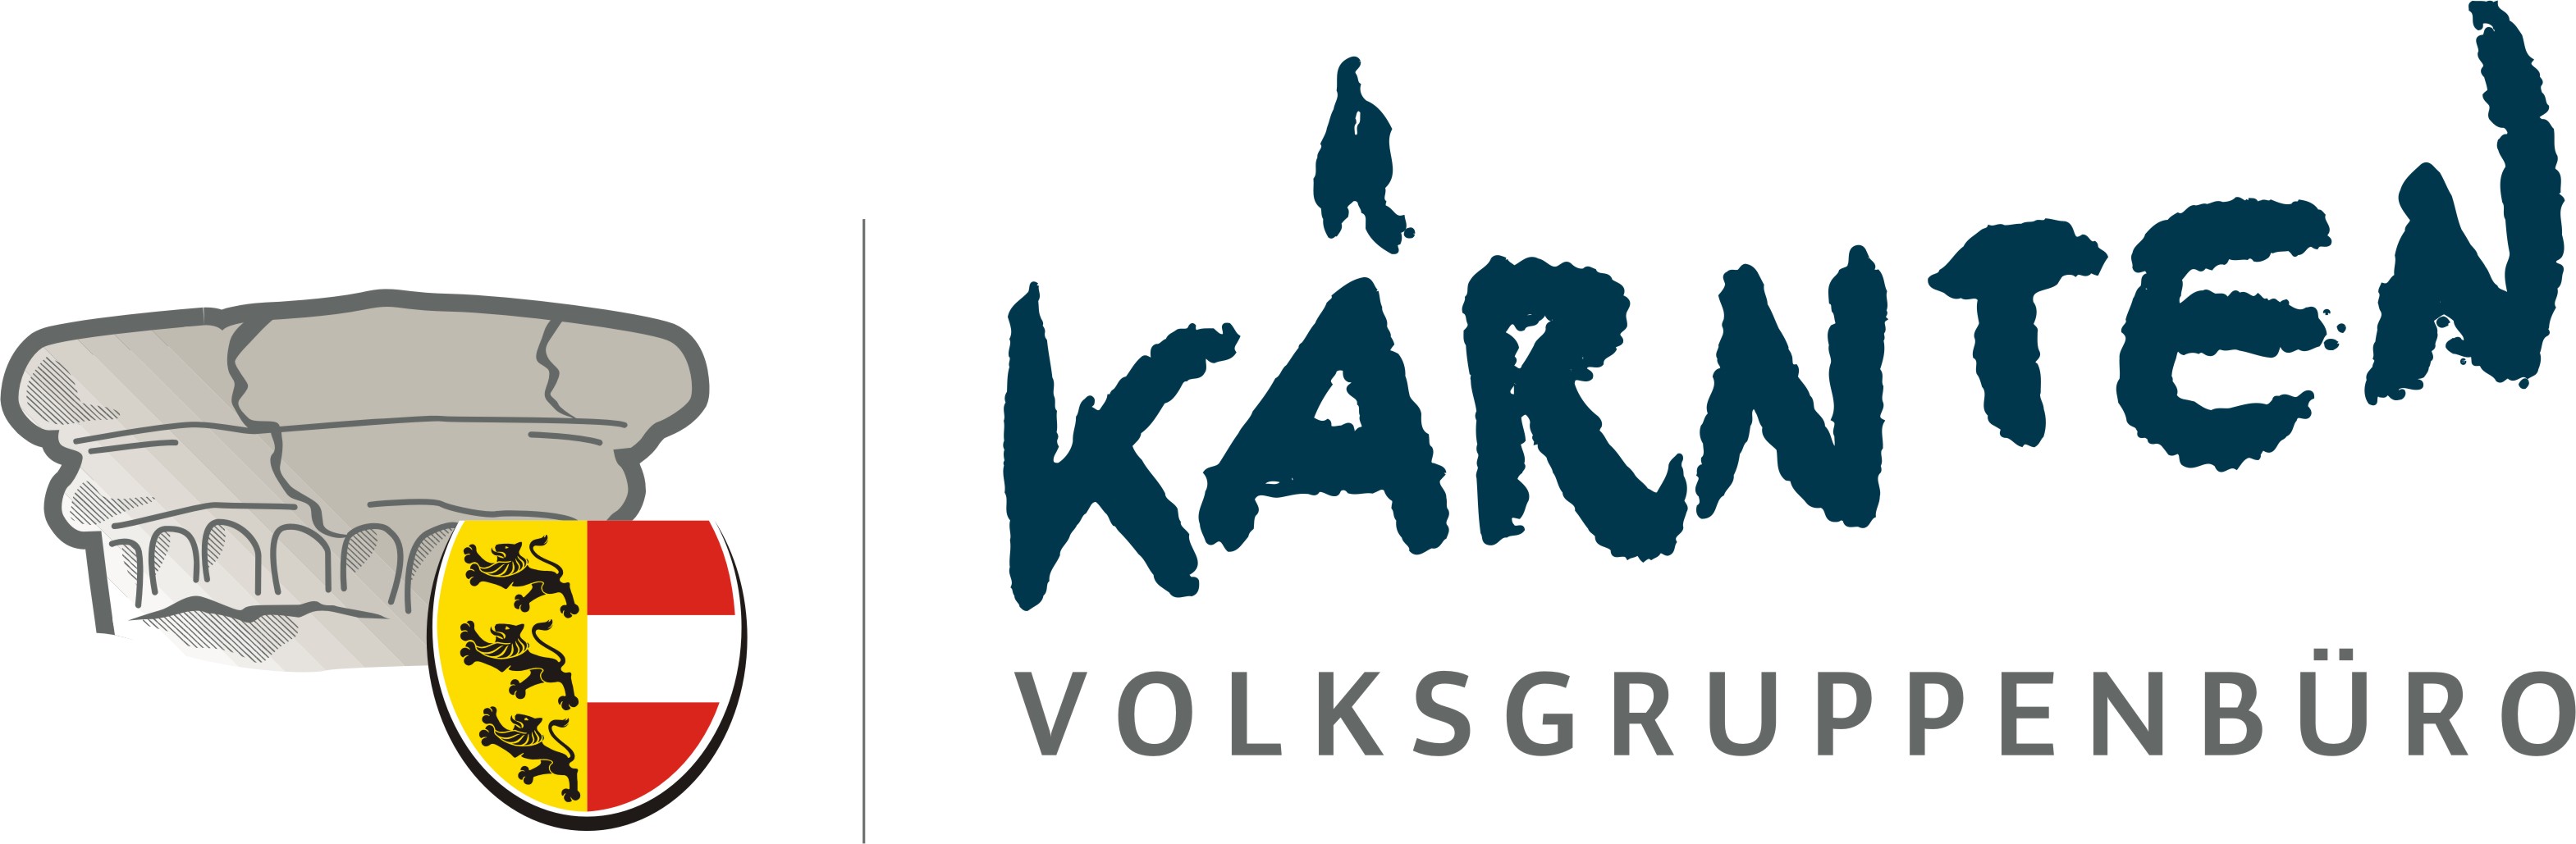 Logo_Volksgruppenbüro.jpg